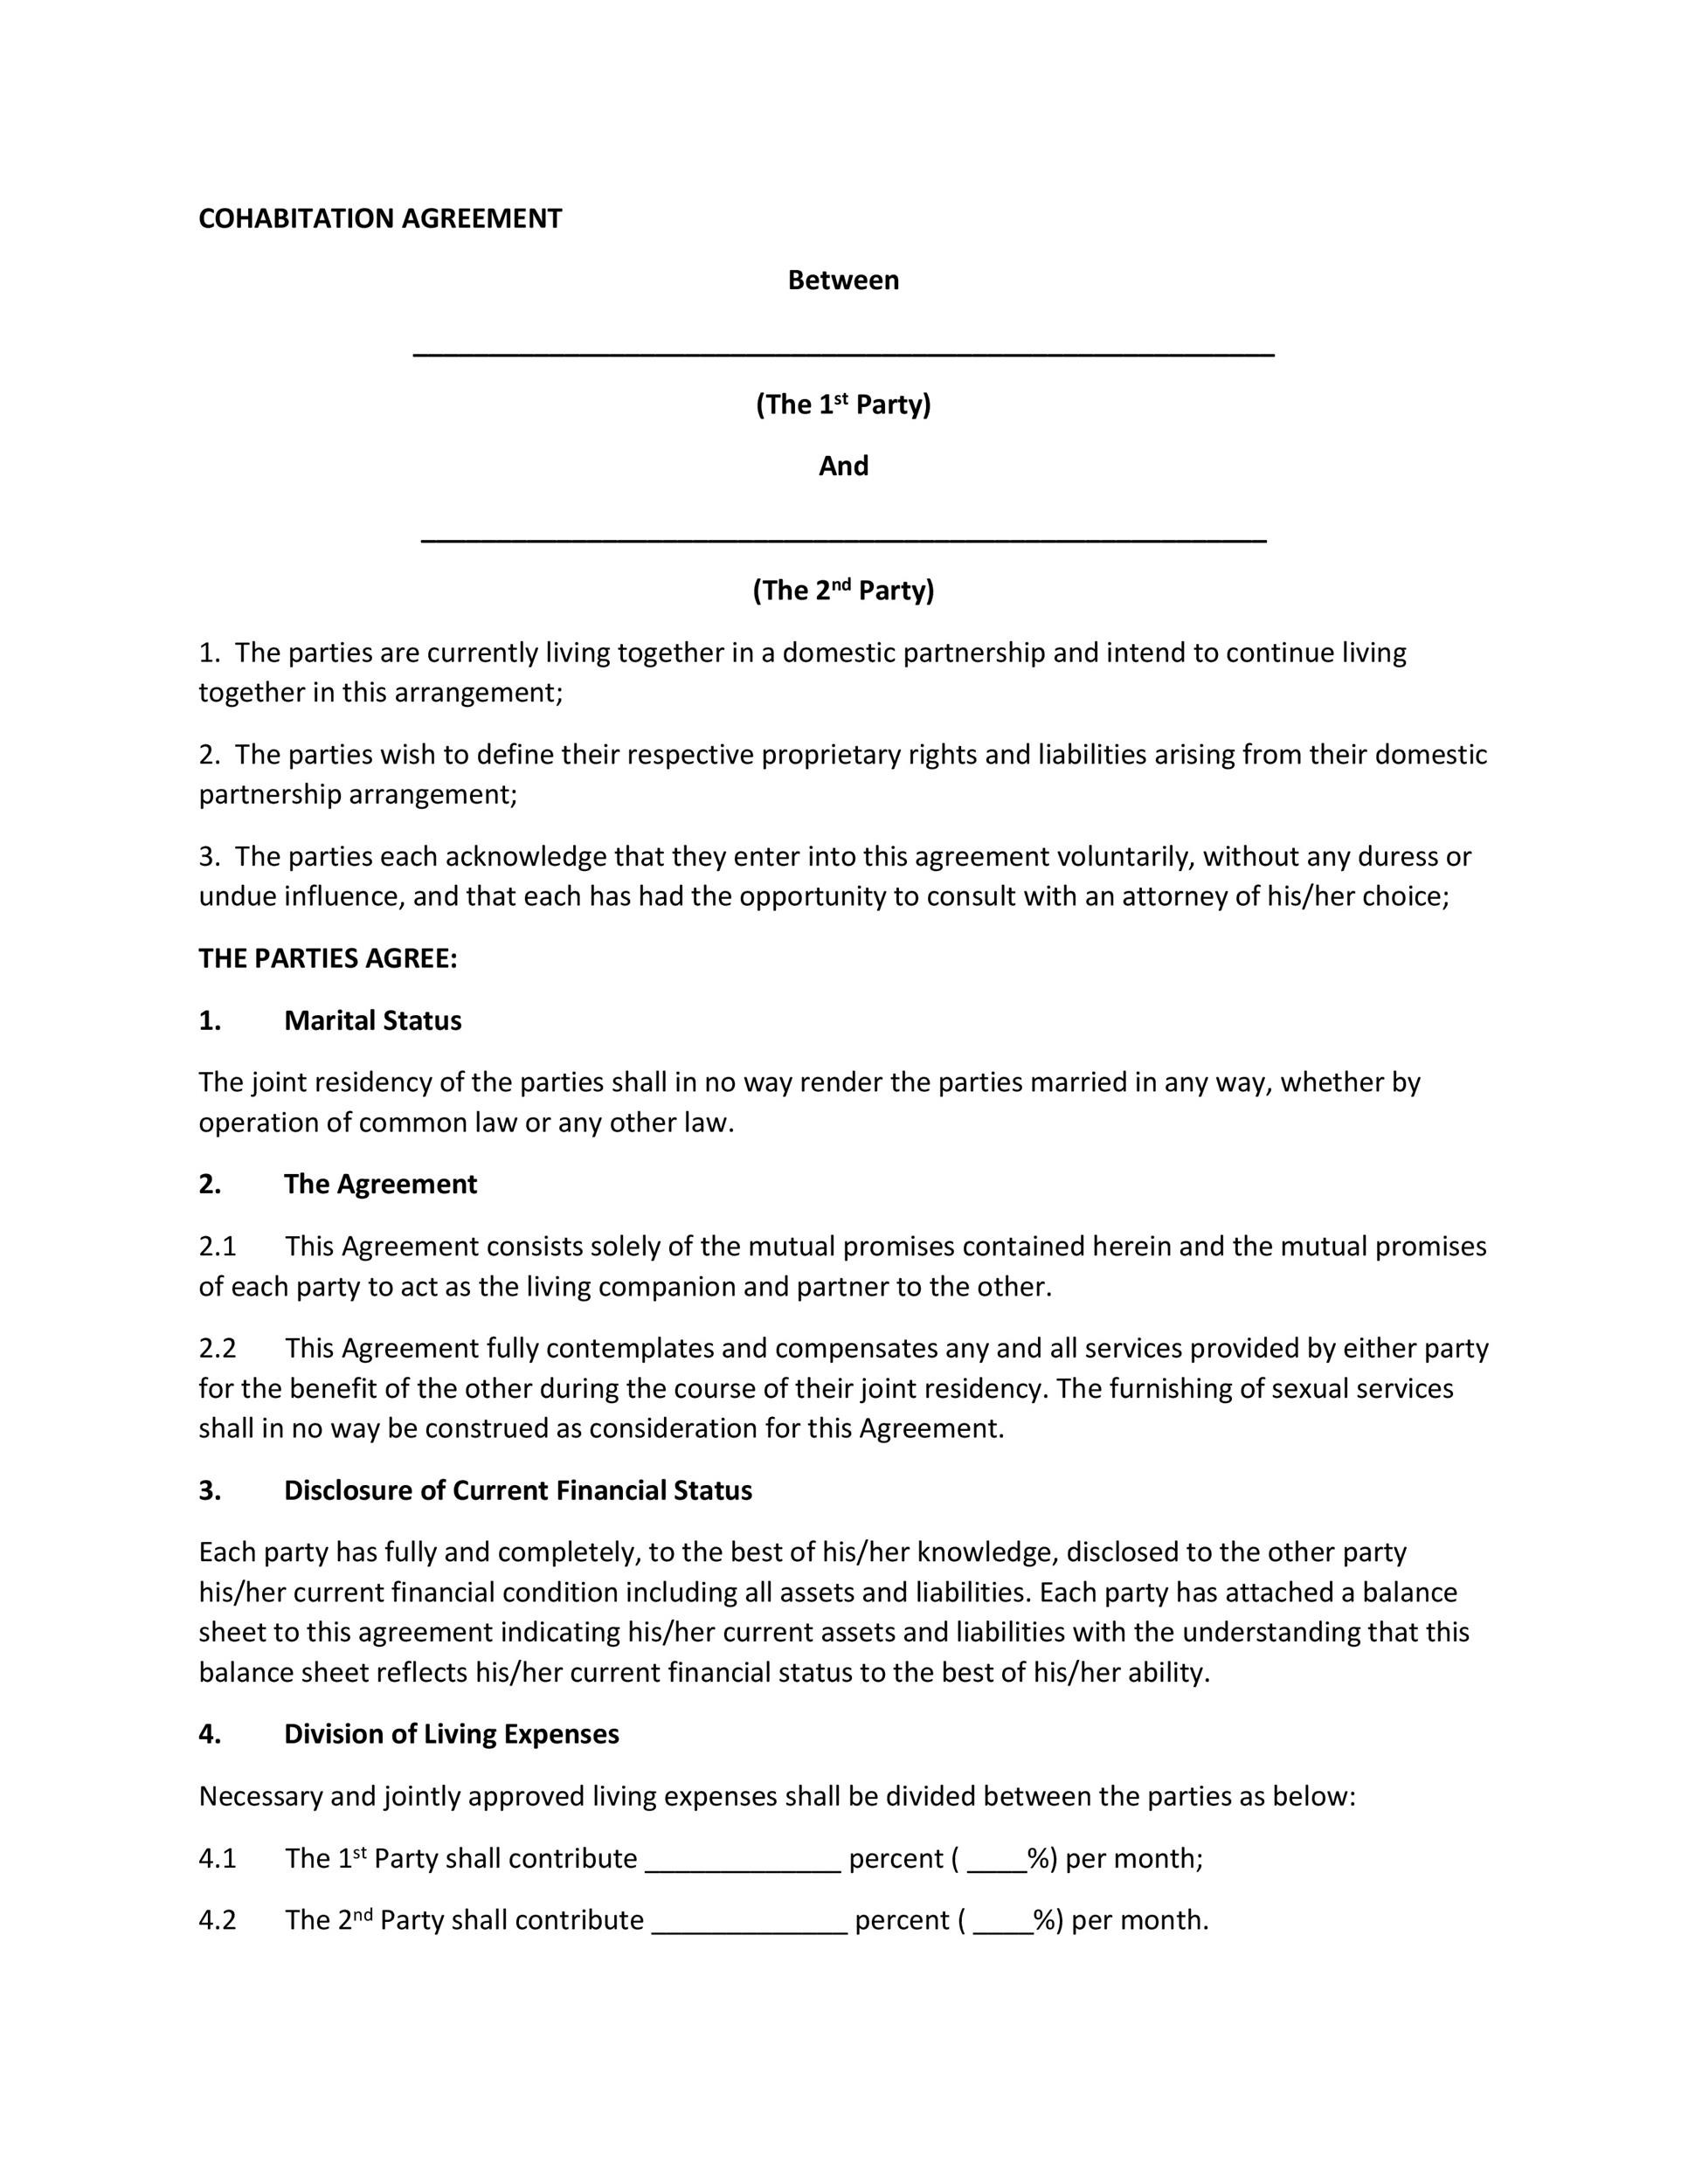 Free cohabitation agreement template 15